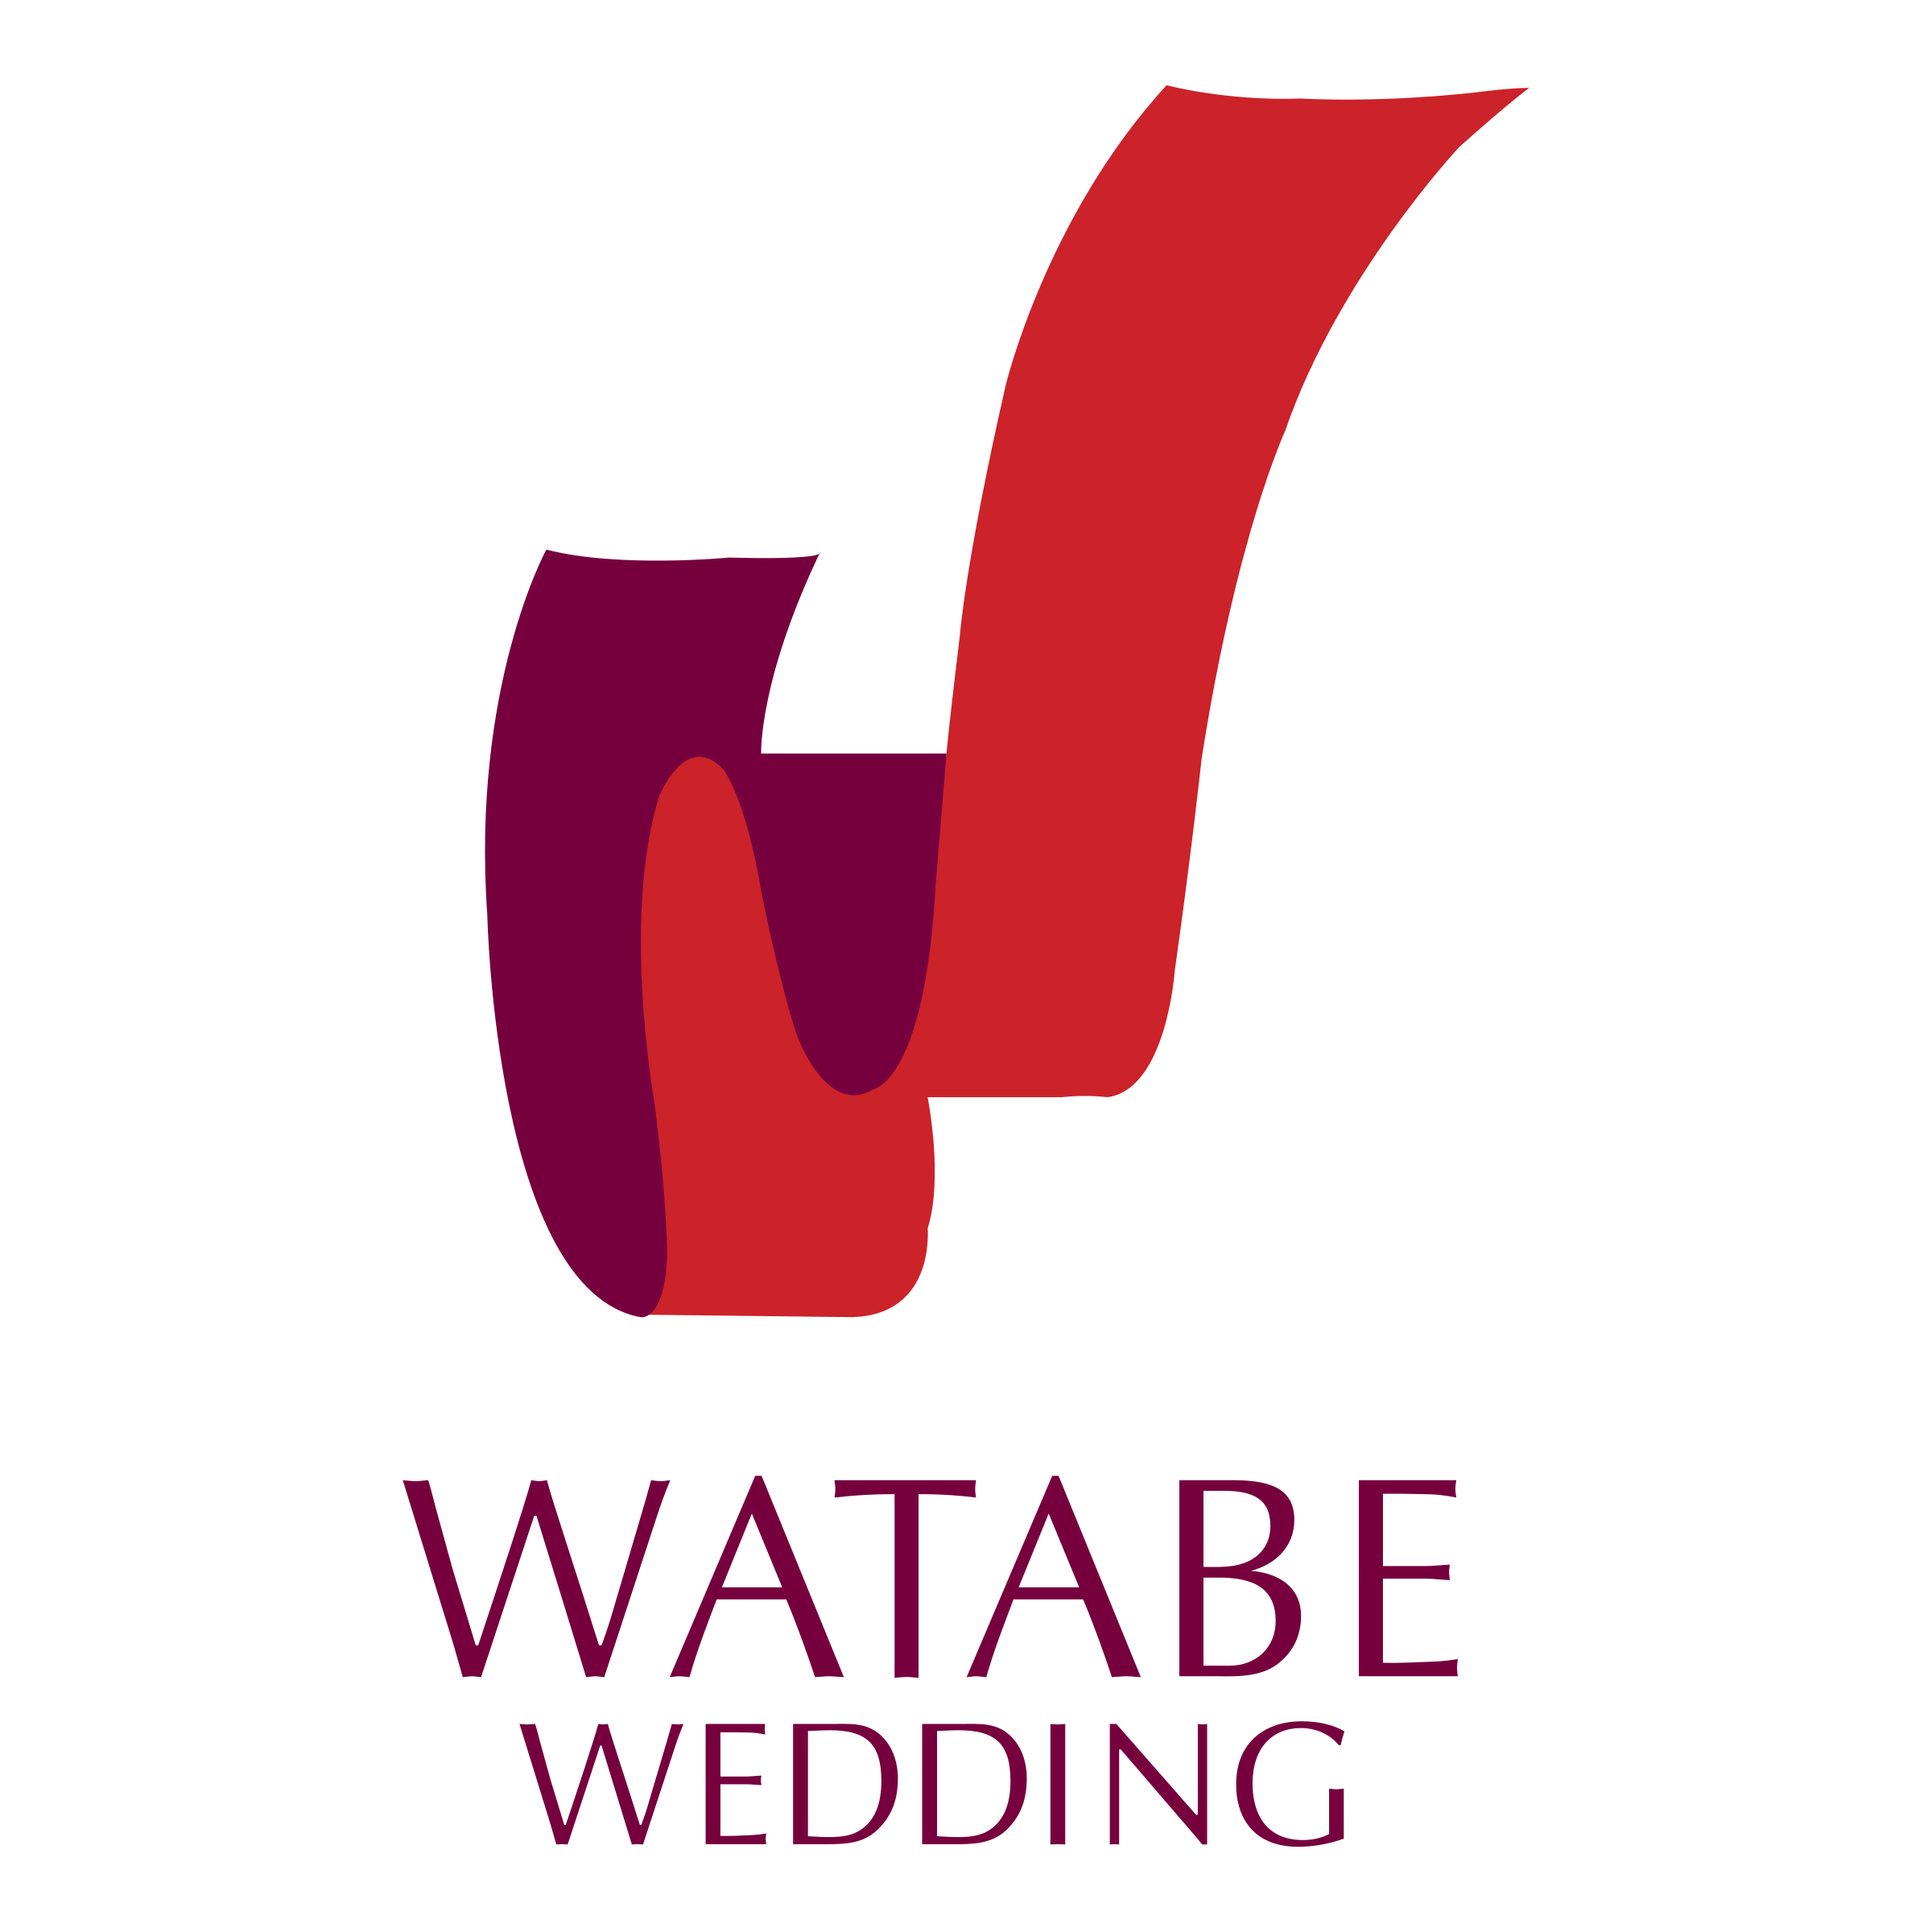 Red Wedding Logo - Watabe Wedding Logo PNG Transparent & SVG Vector